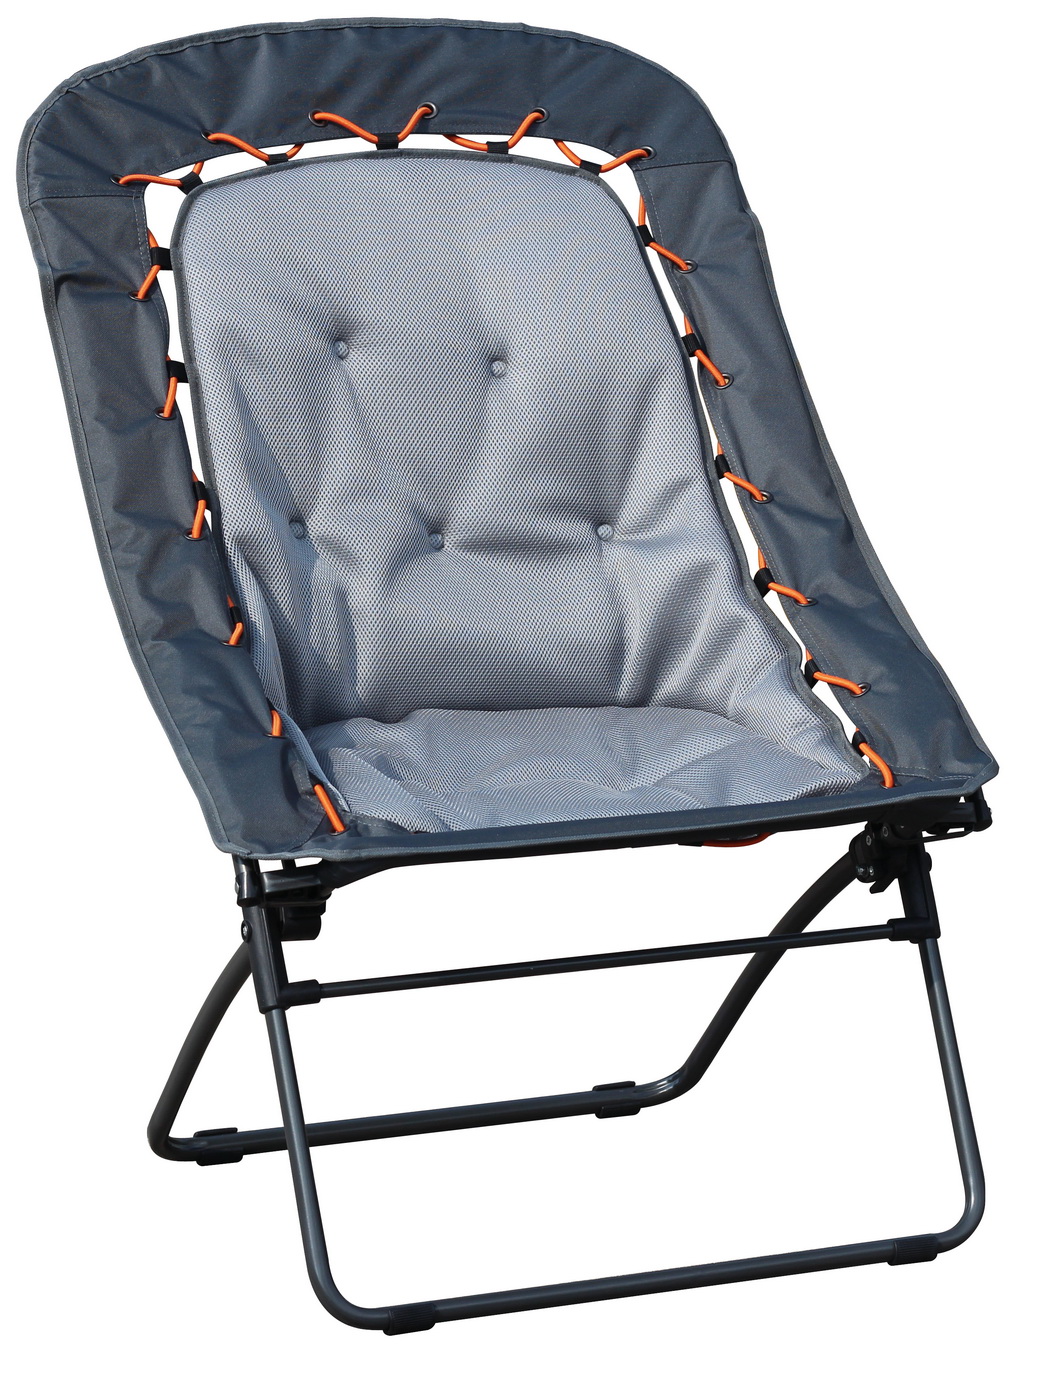 Upc 887798000081 Northwest Territory Oversize Bungee Chair